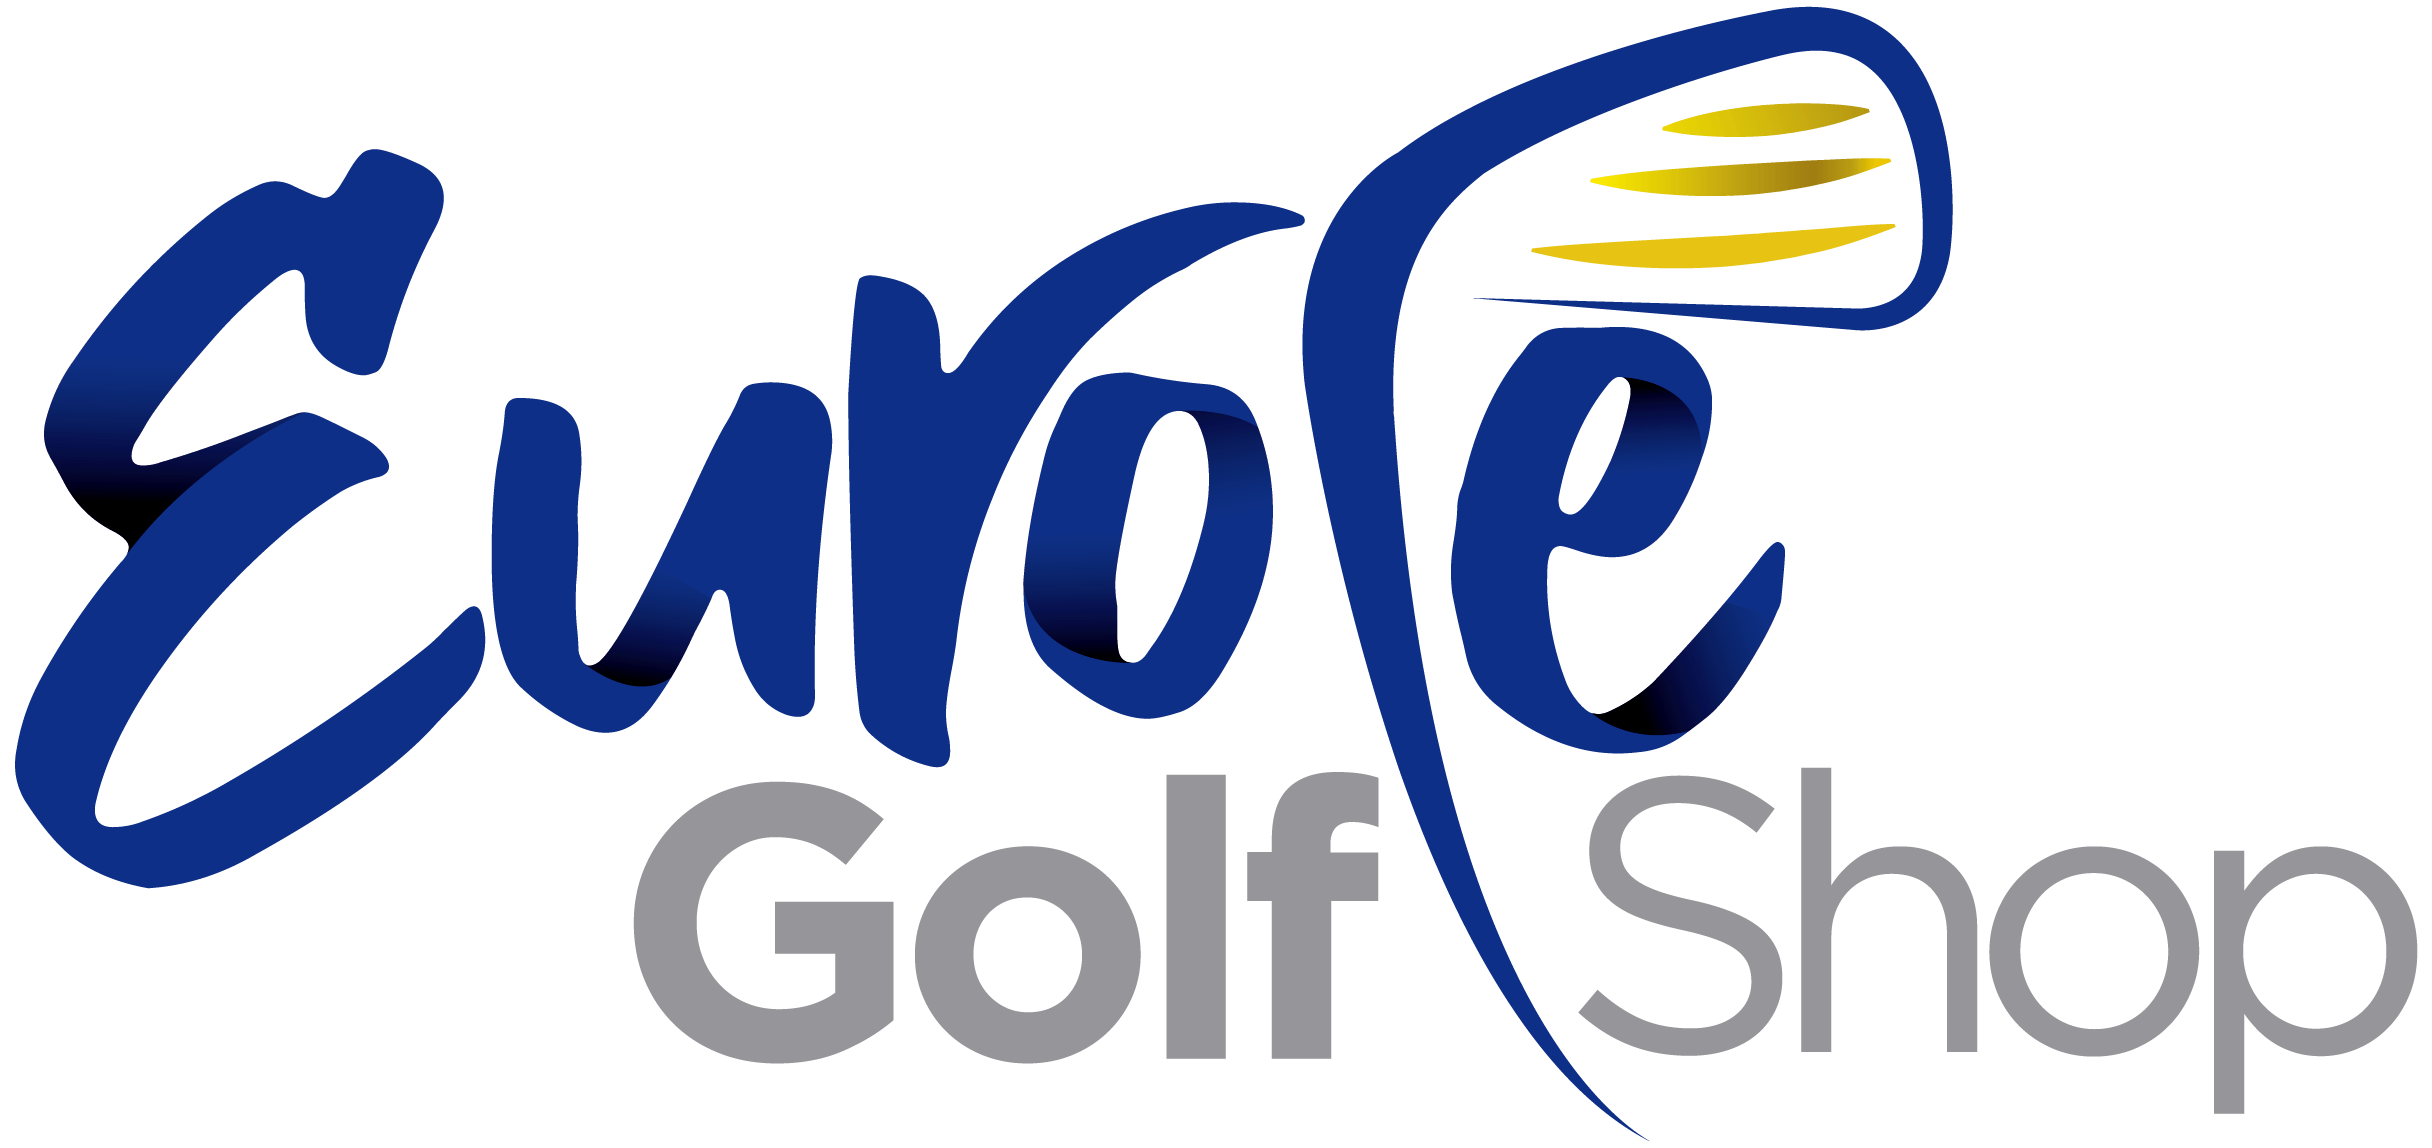 Europe Golf Shop